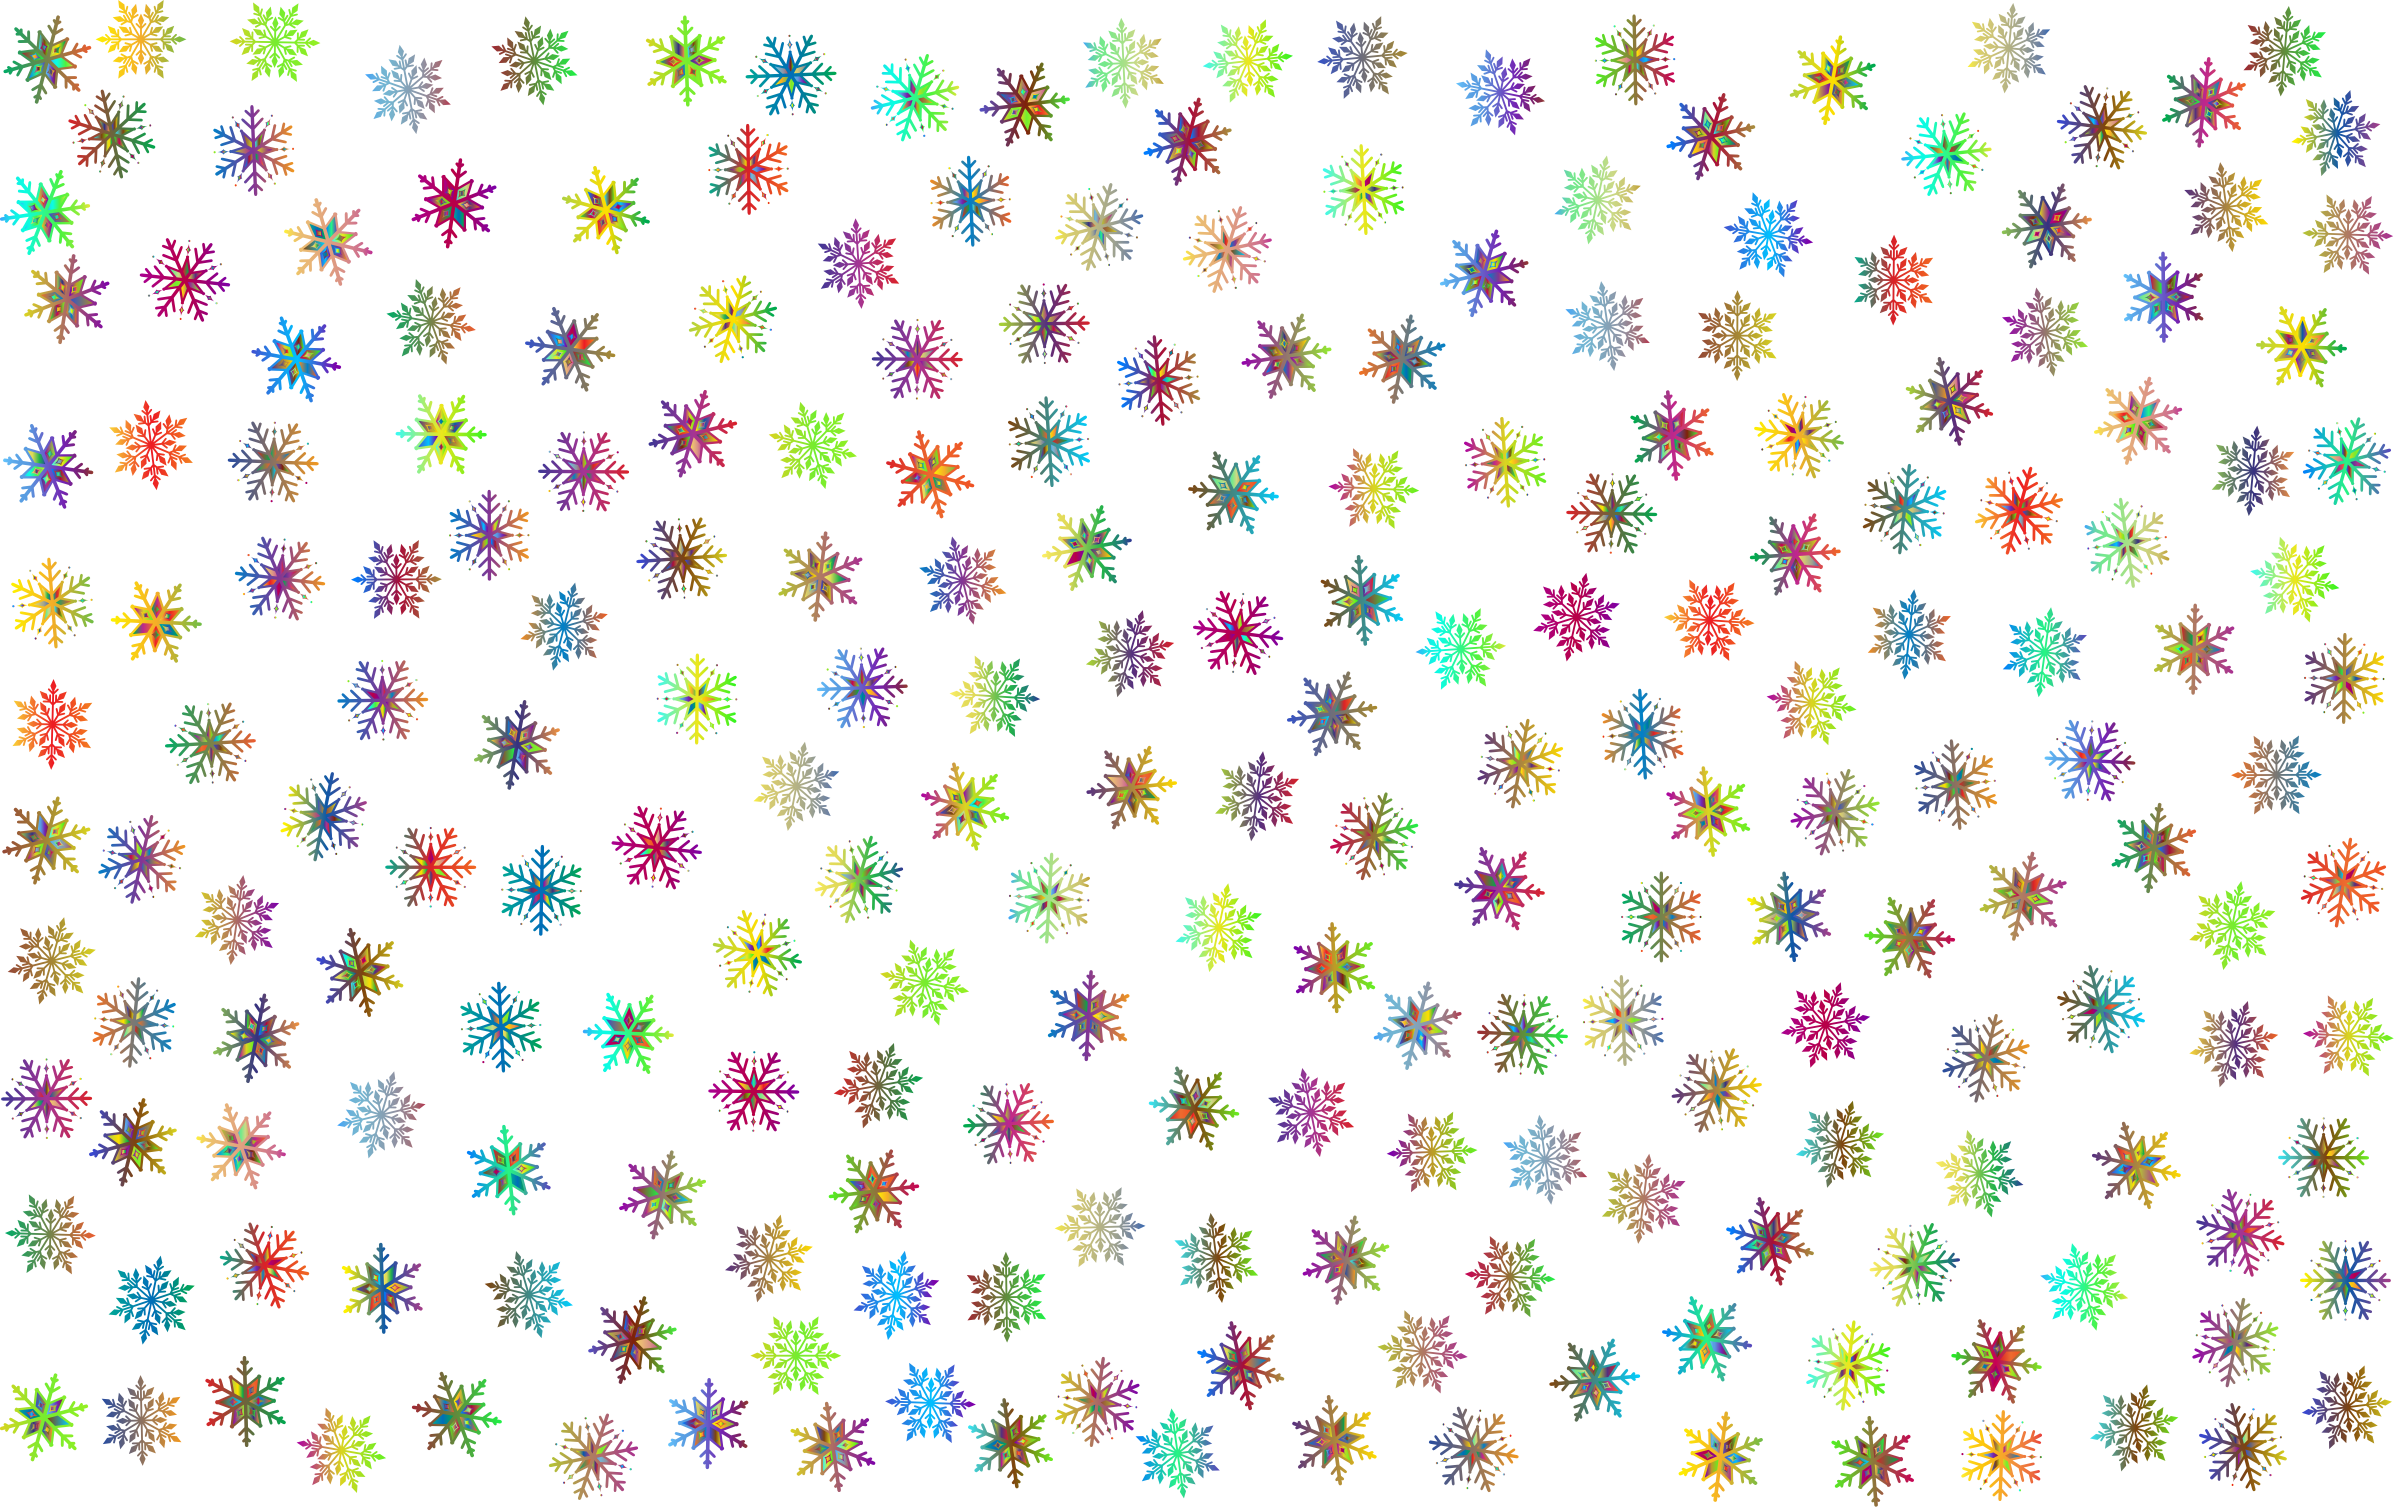 Snowflake clipart snowflake pattern. Prismatic snowflakes no background